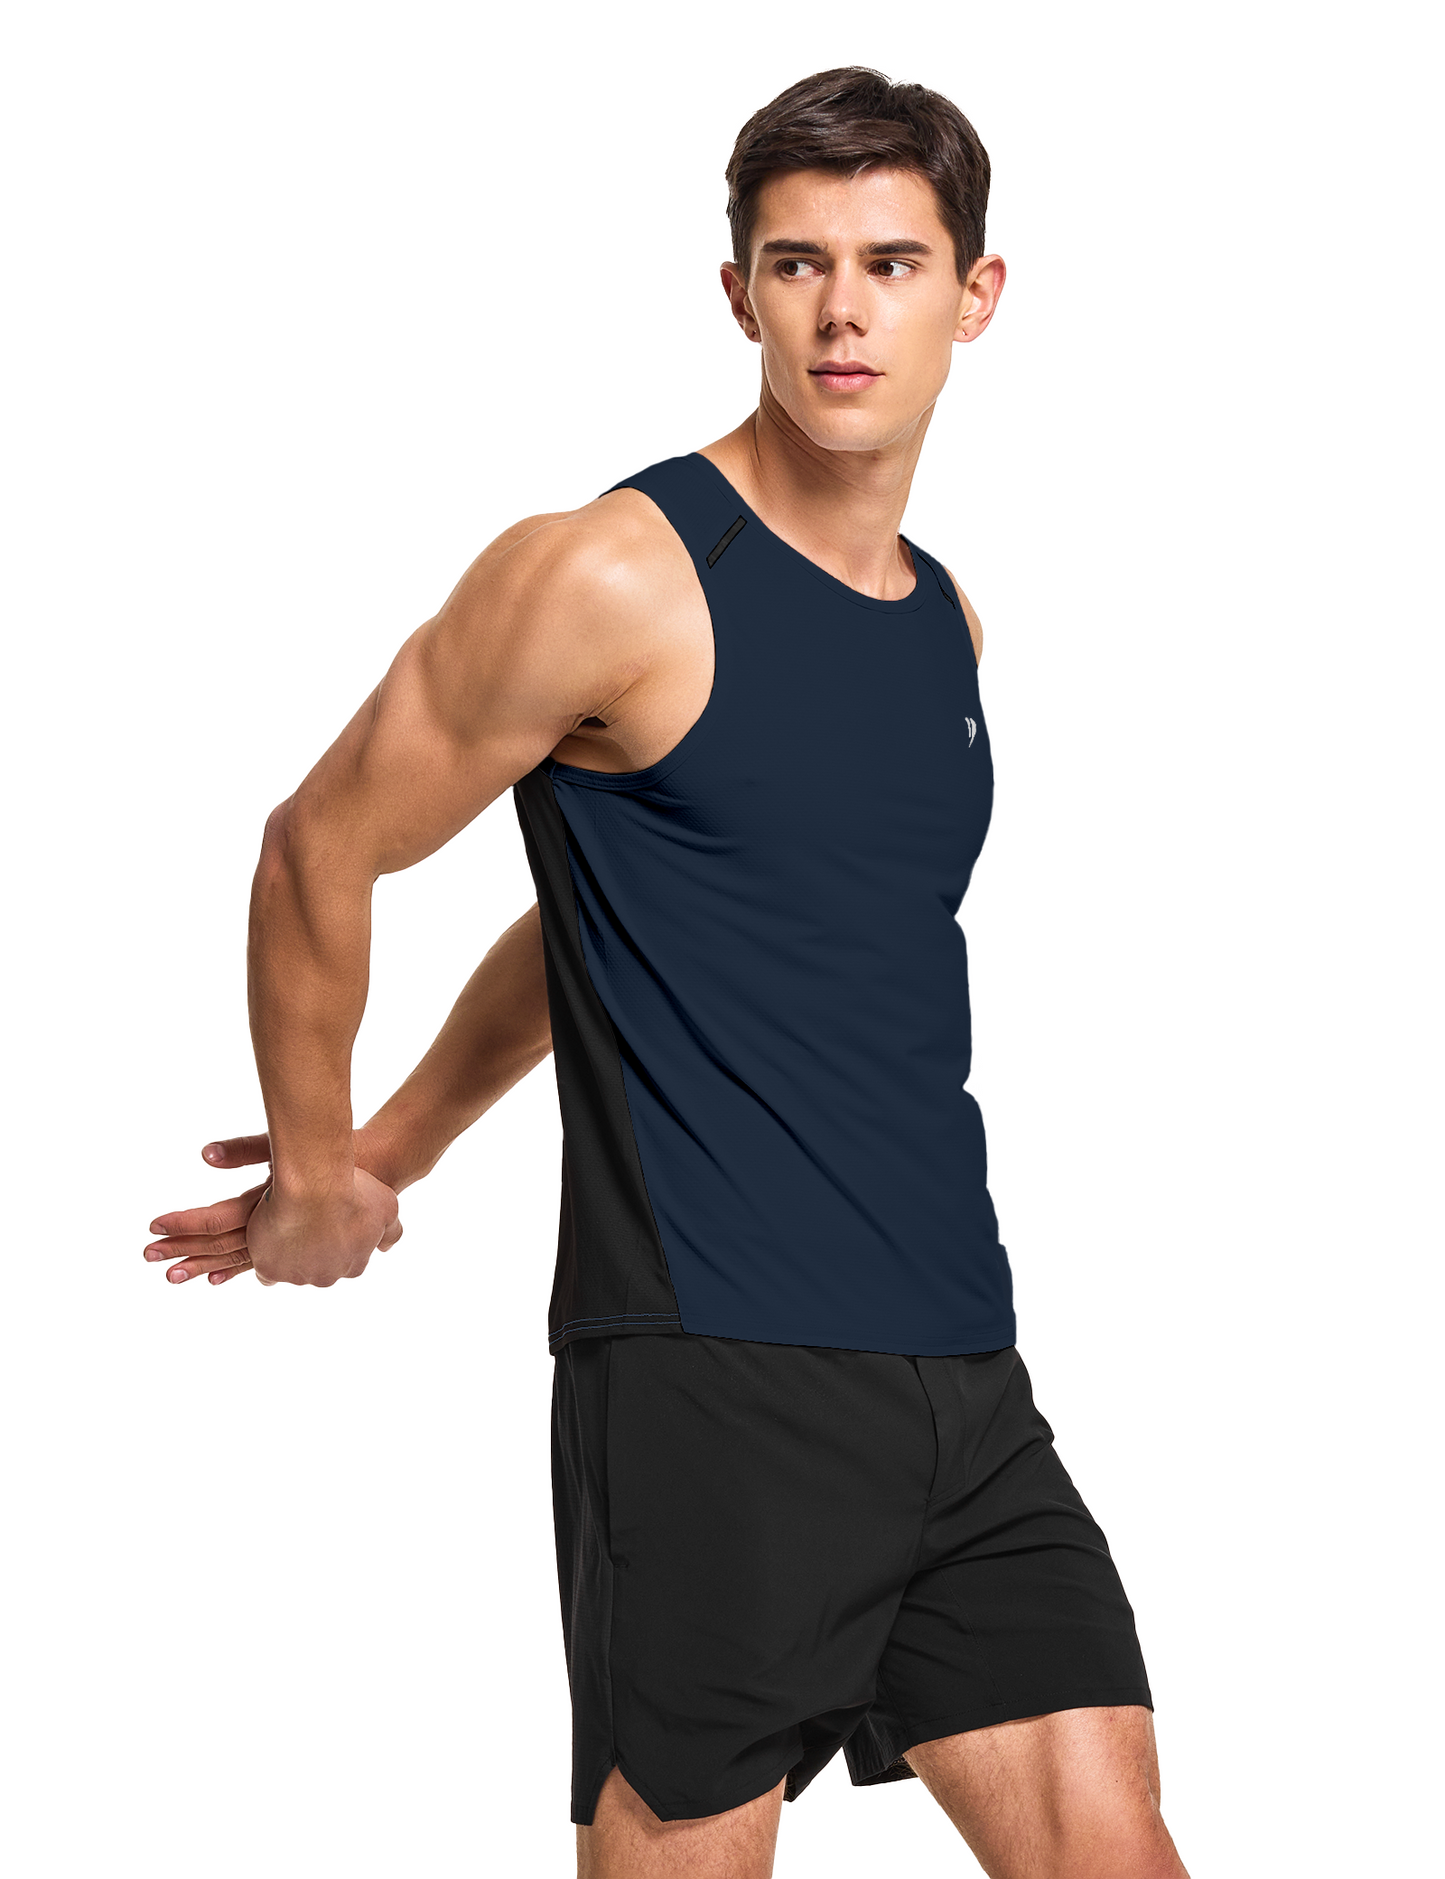 mens running workout gym swim tank top navy blue